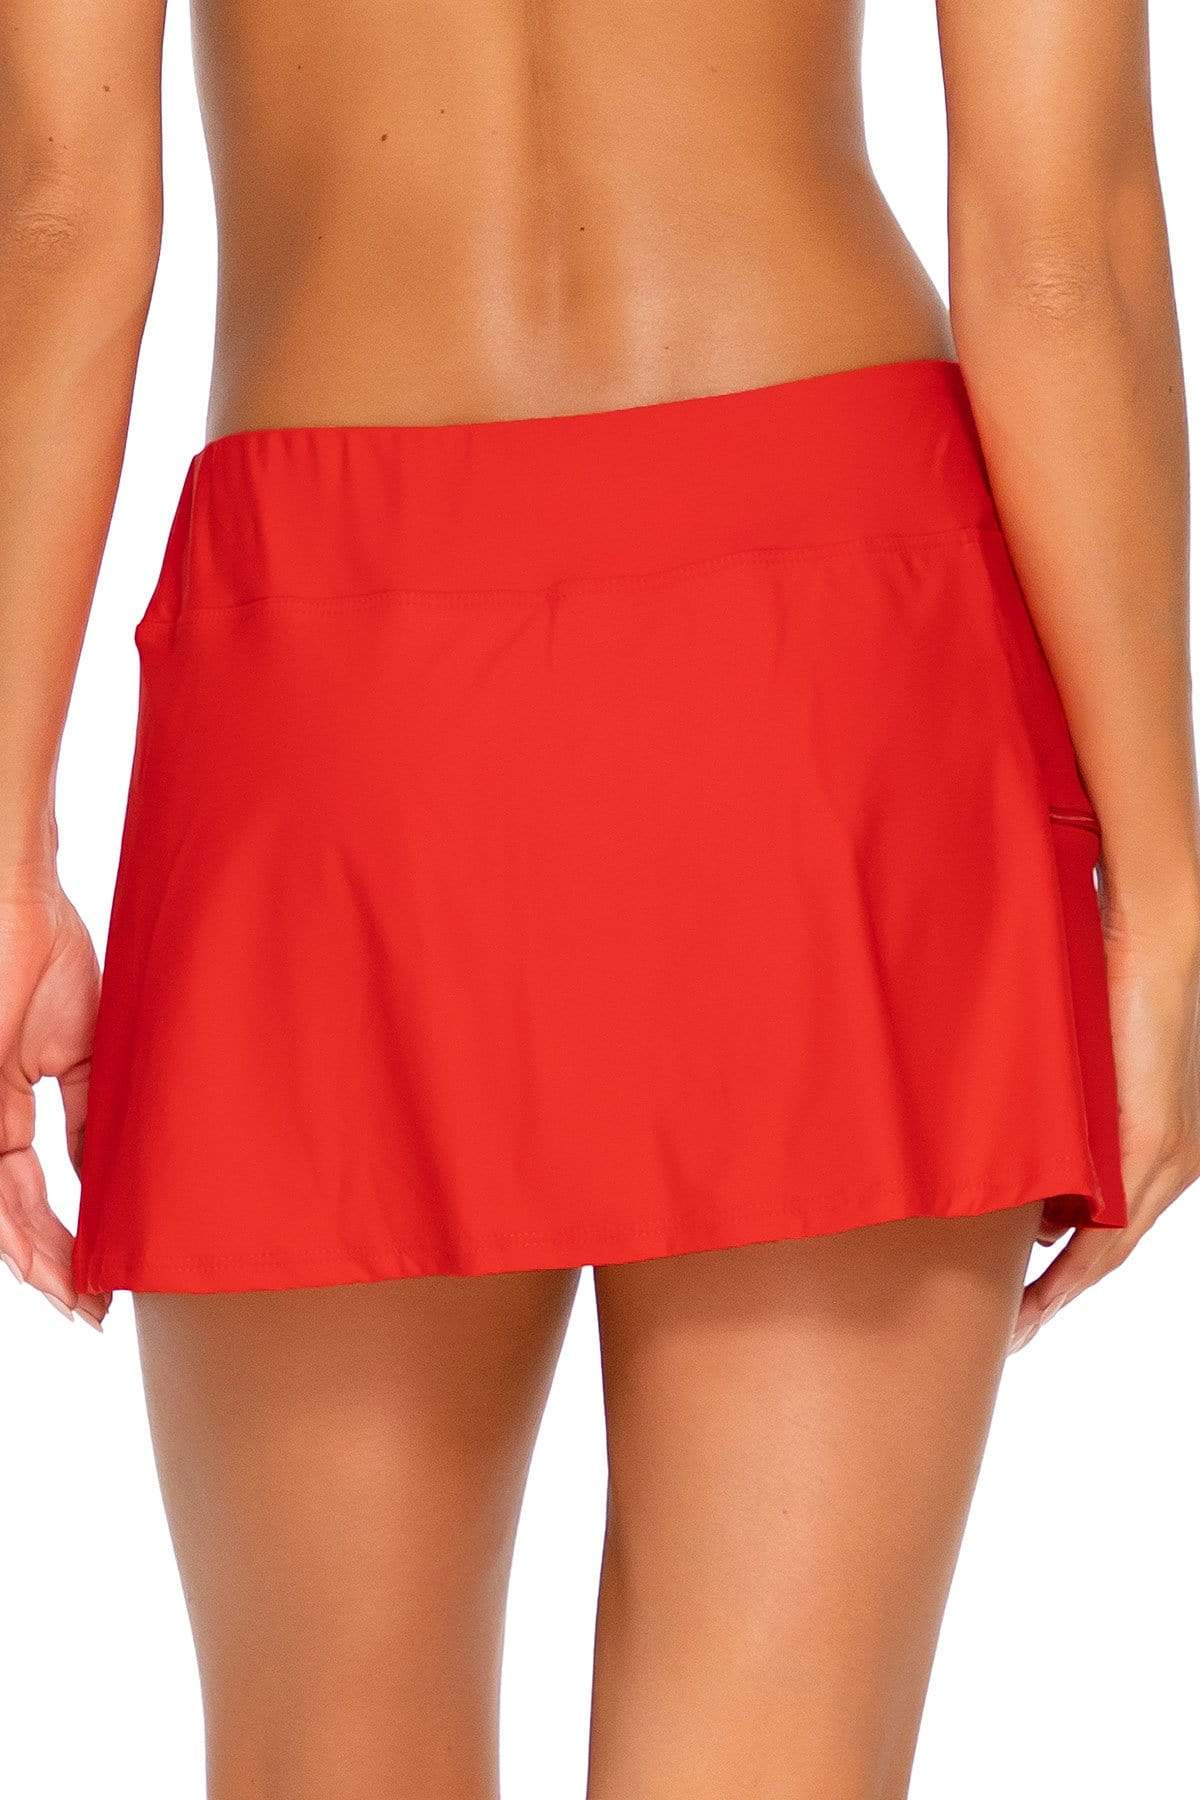 Bestswimwear -  Sunsets Scarlet Sporty Swim Skirt